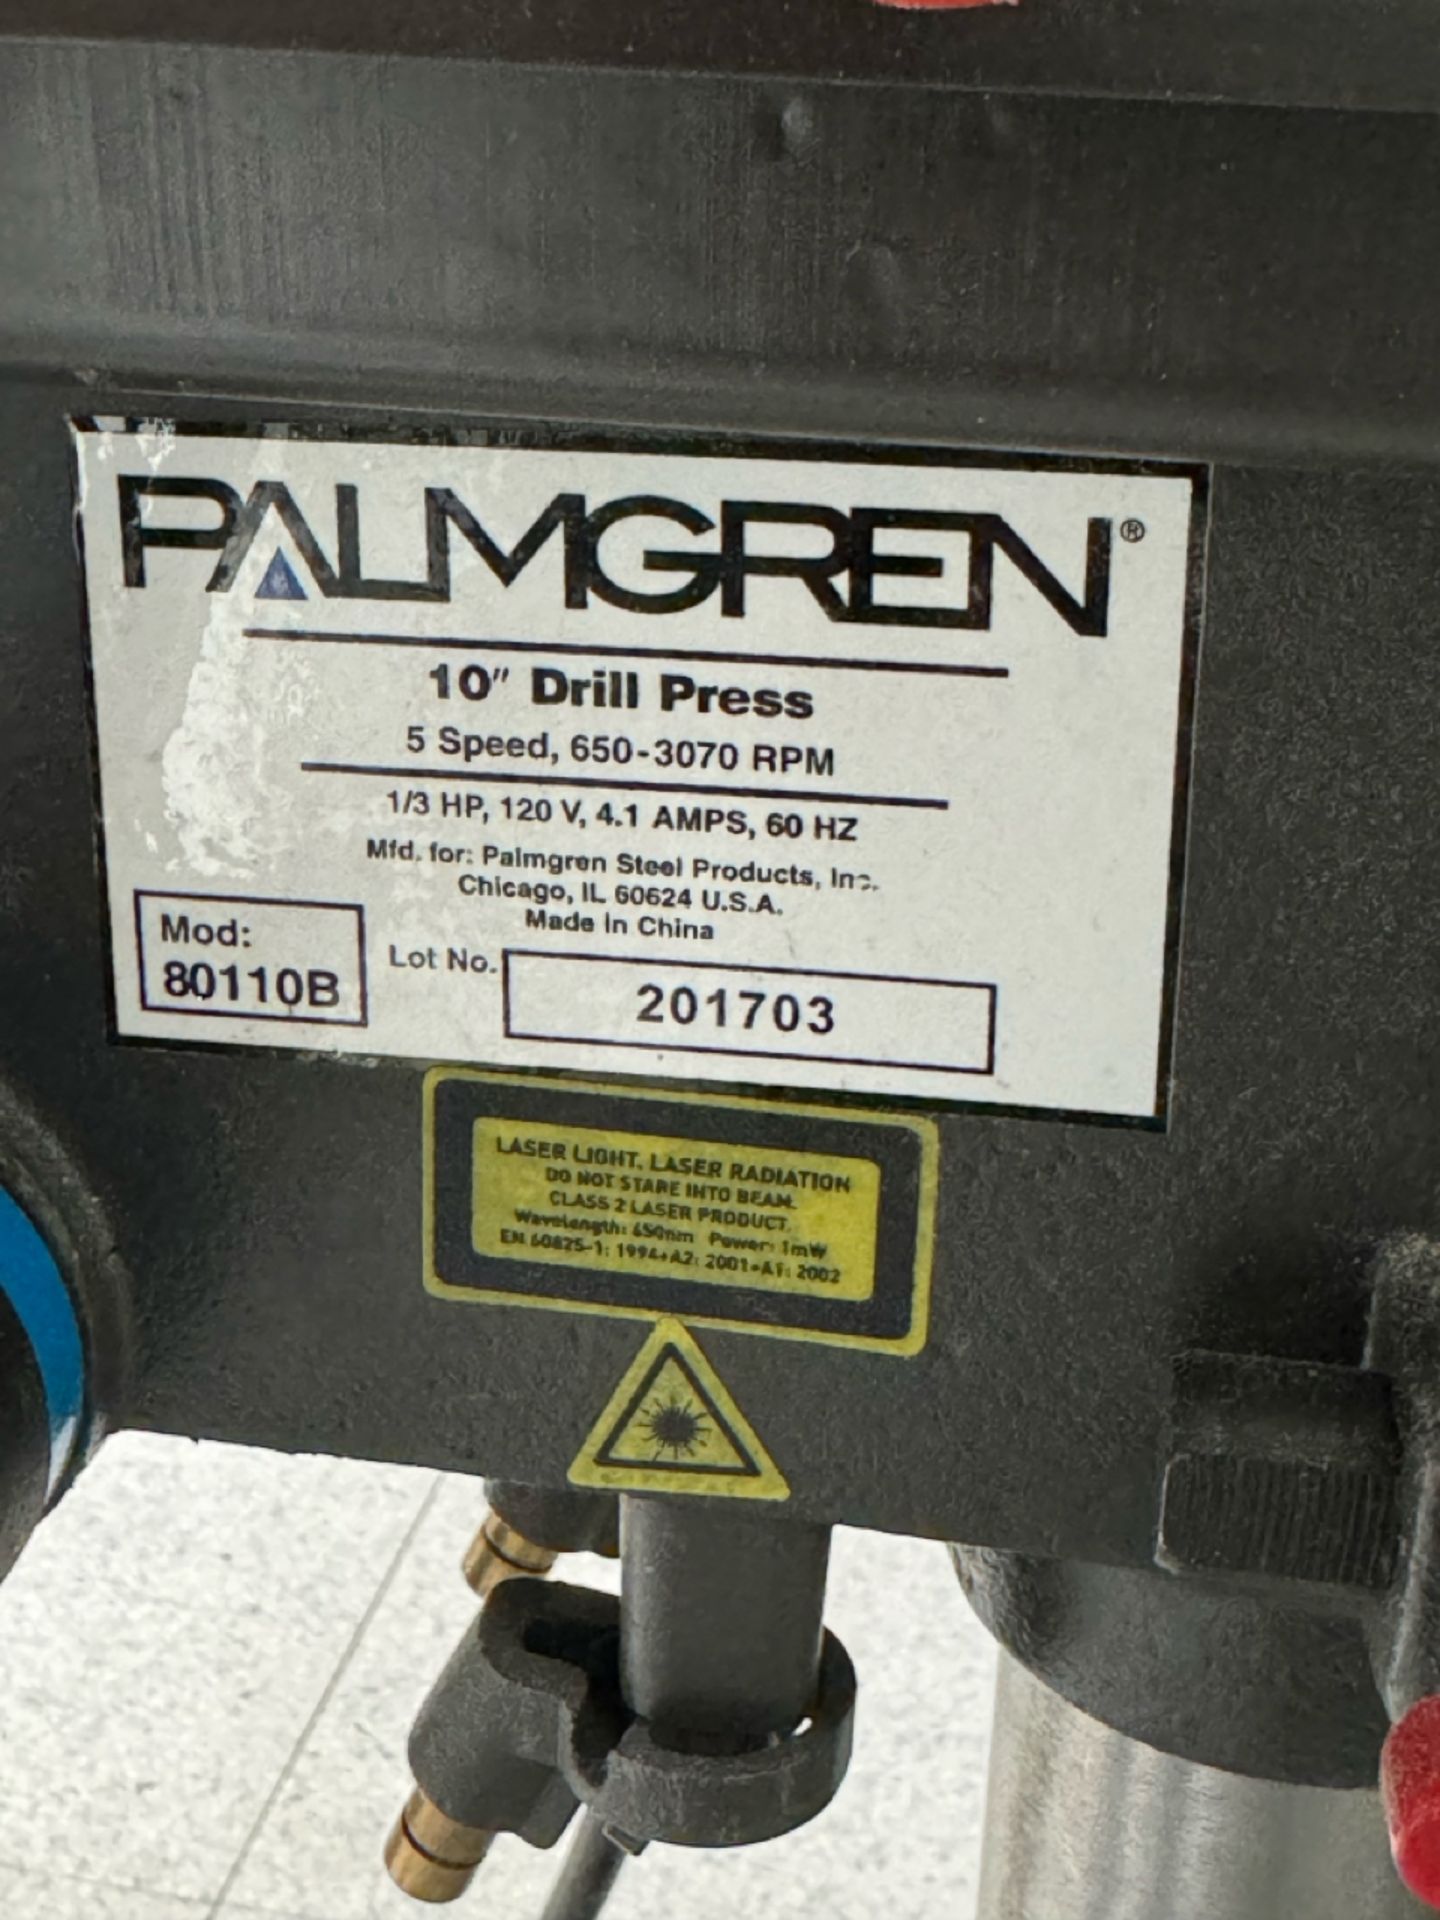 PalmGren 10" Drill Press - Image 2 of 4